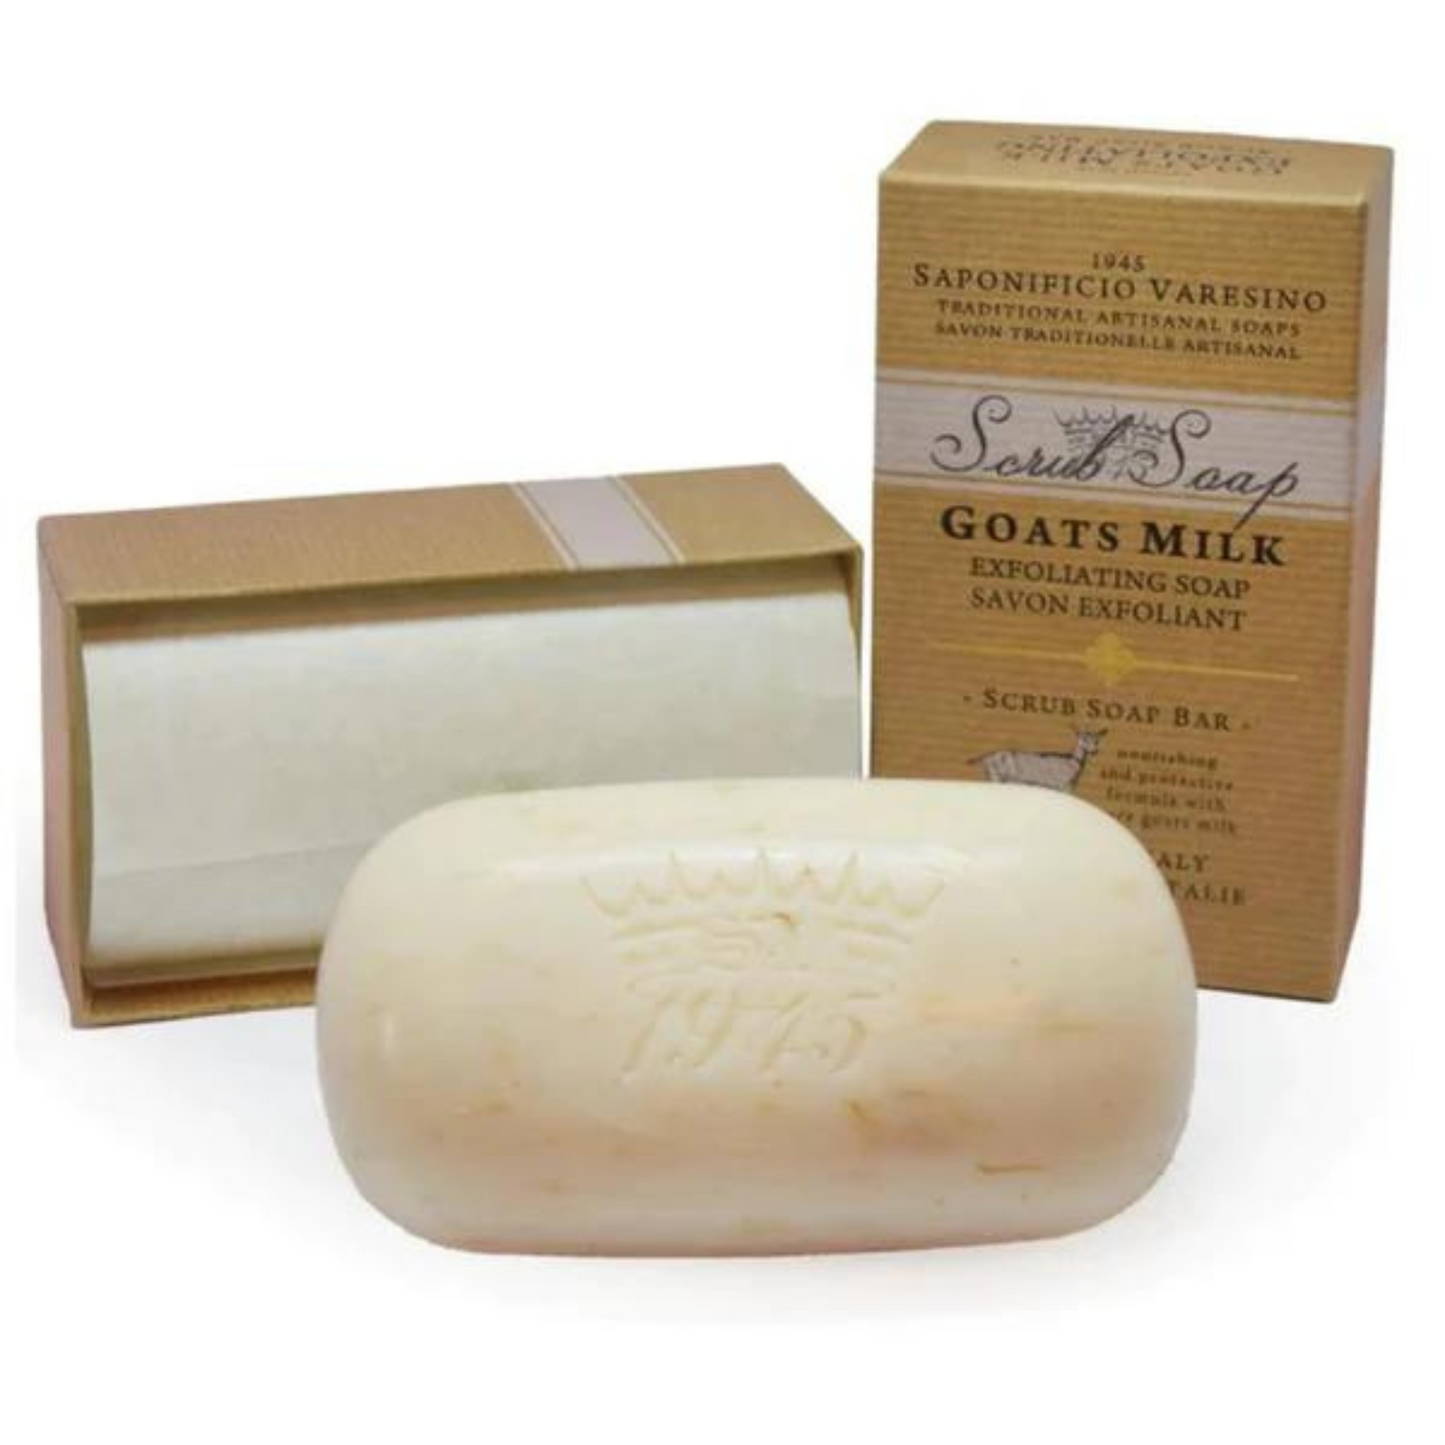 Primary Image of Saponificio Varesino Goats Milk Scrub Soap (300 g)